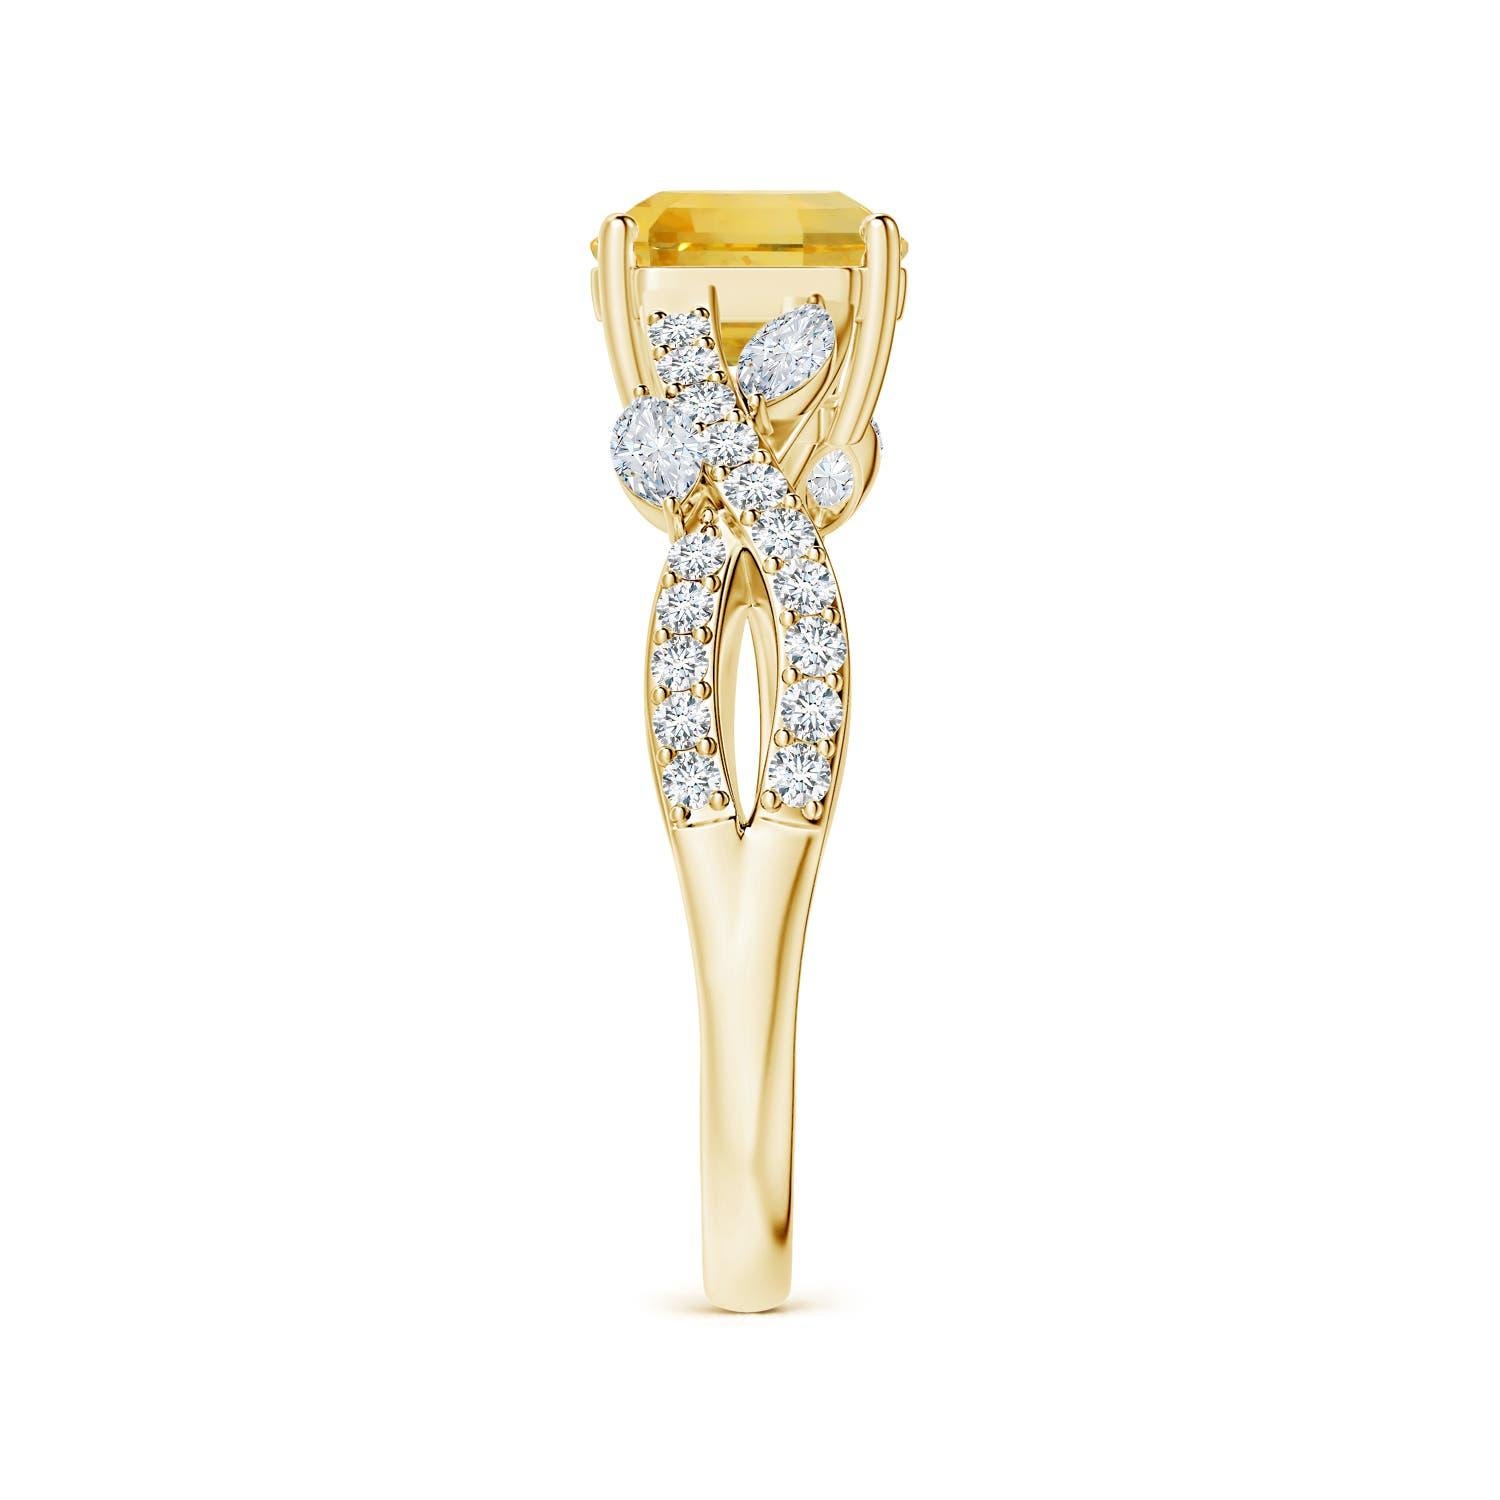 For Sale:  Angara Gia Certified Emerald-Cut Yellow Sapphire Diamond Ring in Yellow Gold 4